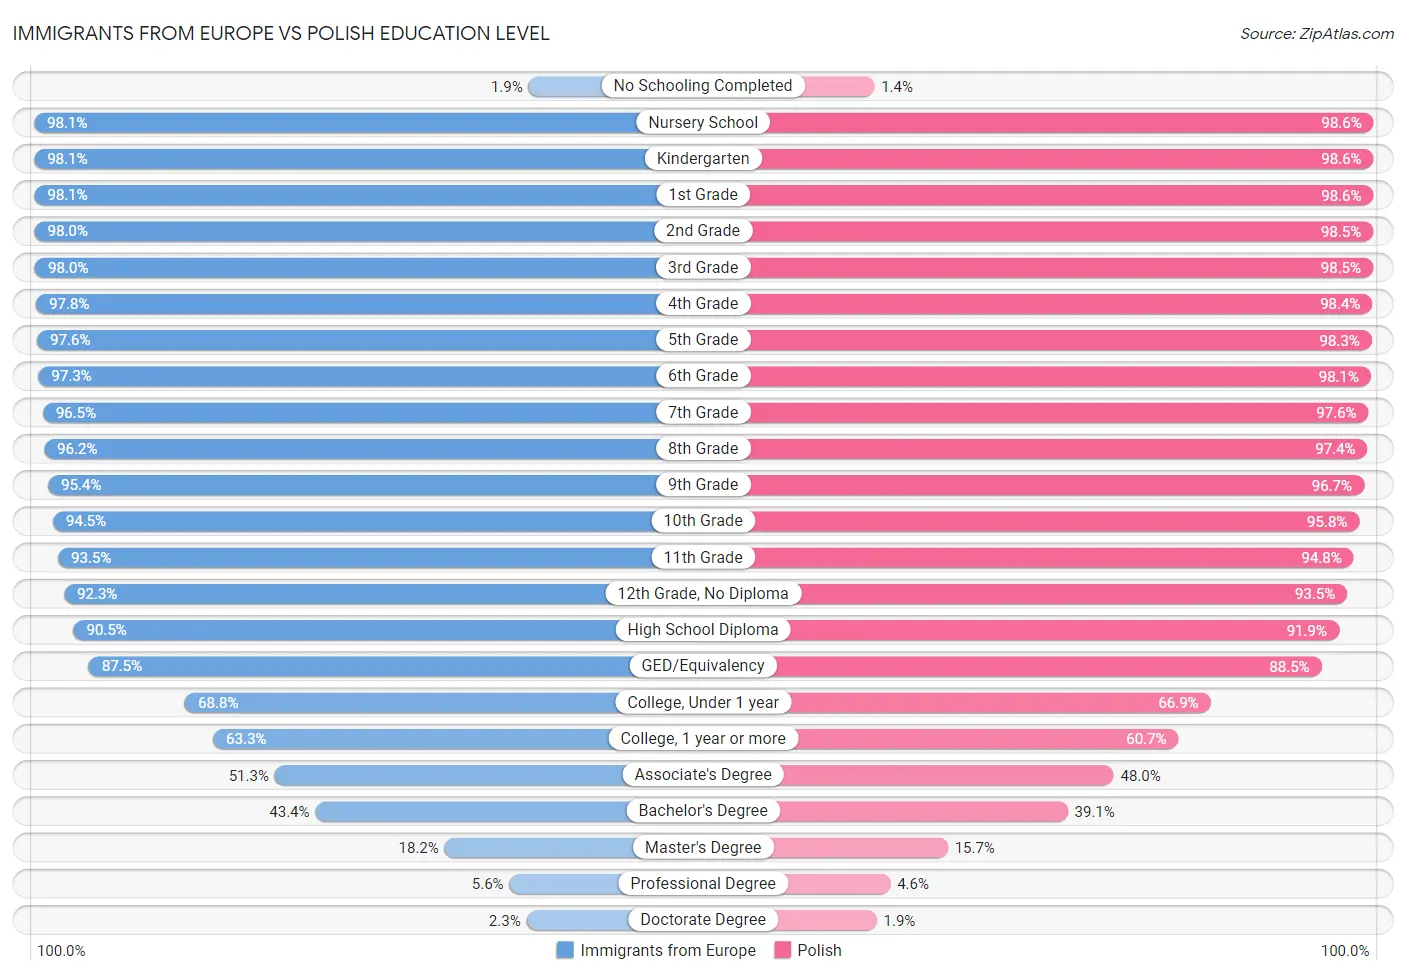 Immigrants from Europe vs Polish Education Level